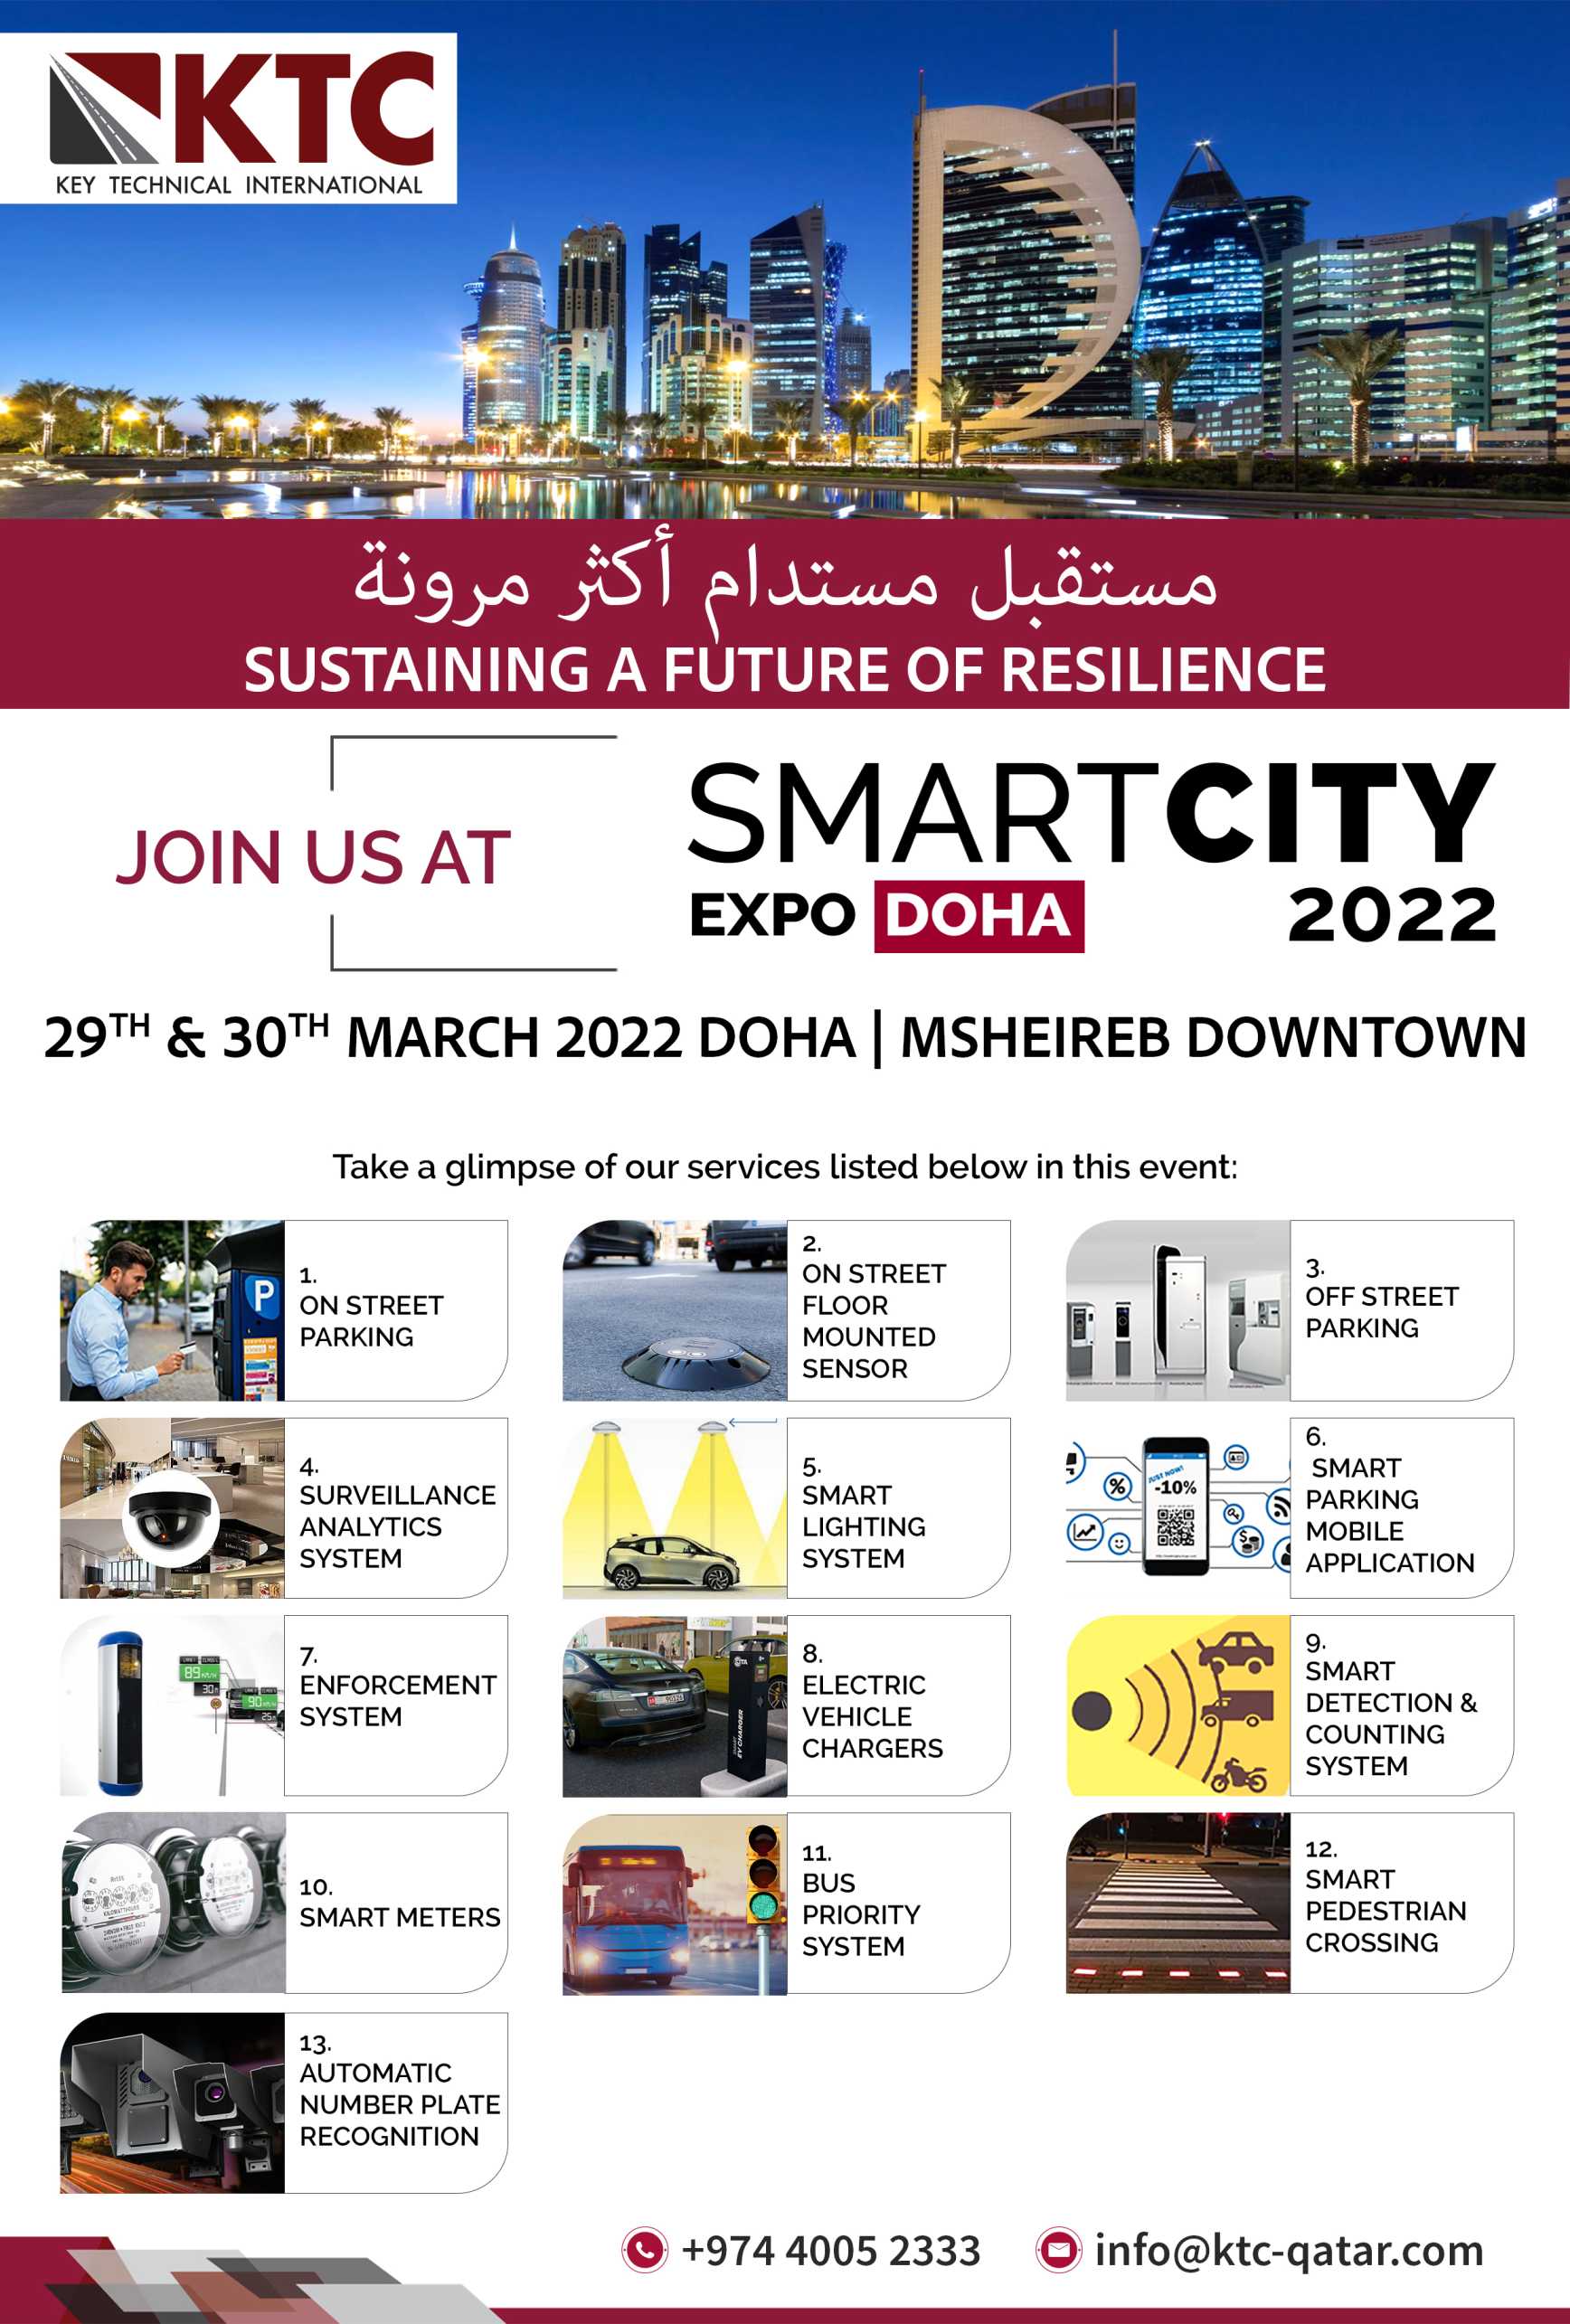 SmartCity Expo Doha 2022